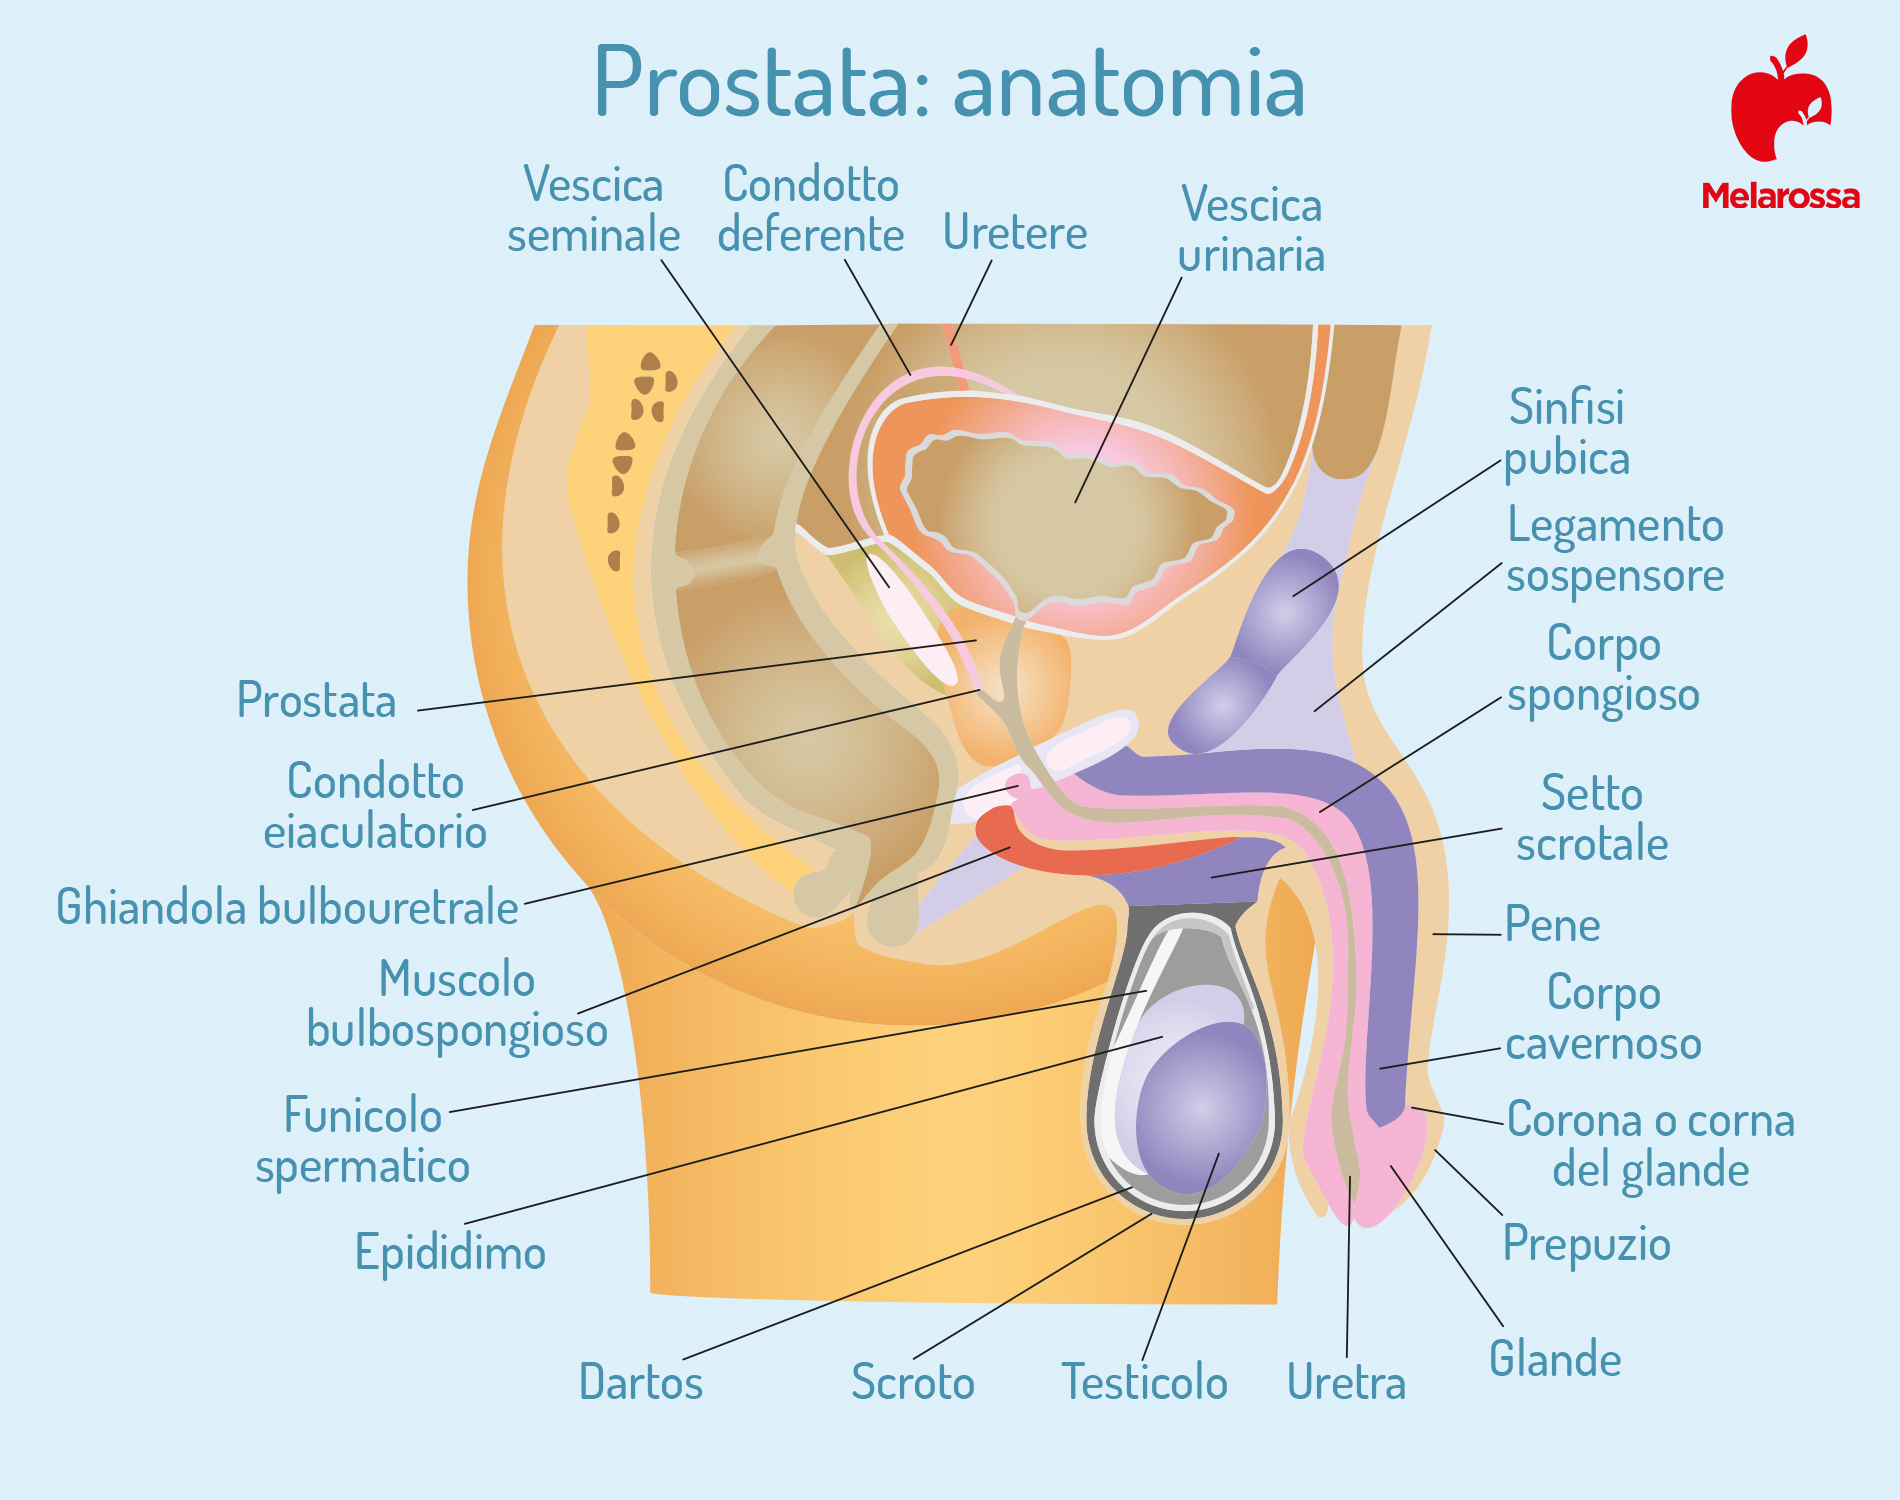 Ipertrofia prostatica: prostata anatomia